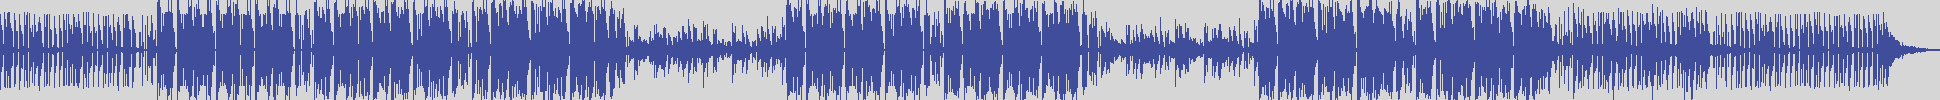 nf_boyz_records [NFY027] Ralphie Boss - Body in Motion [Basement Mix] audio wave form